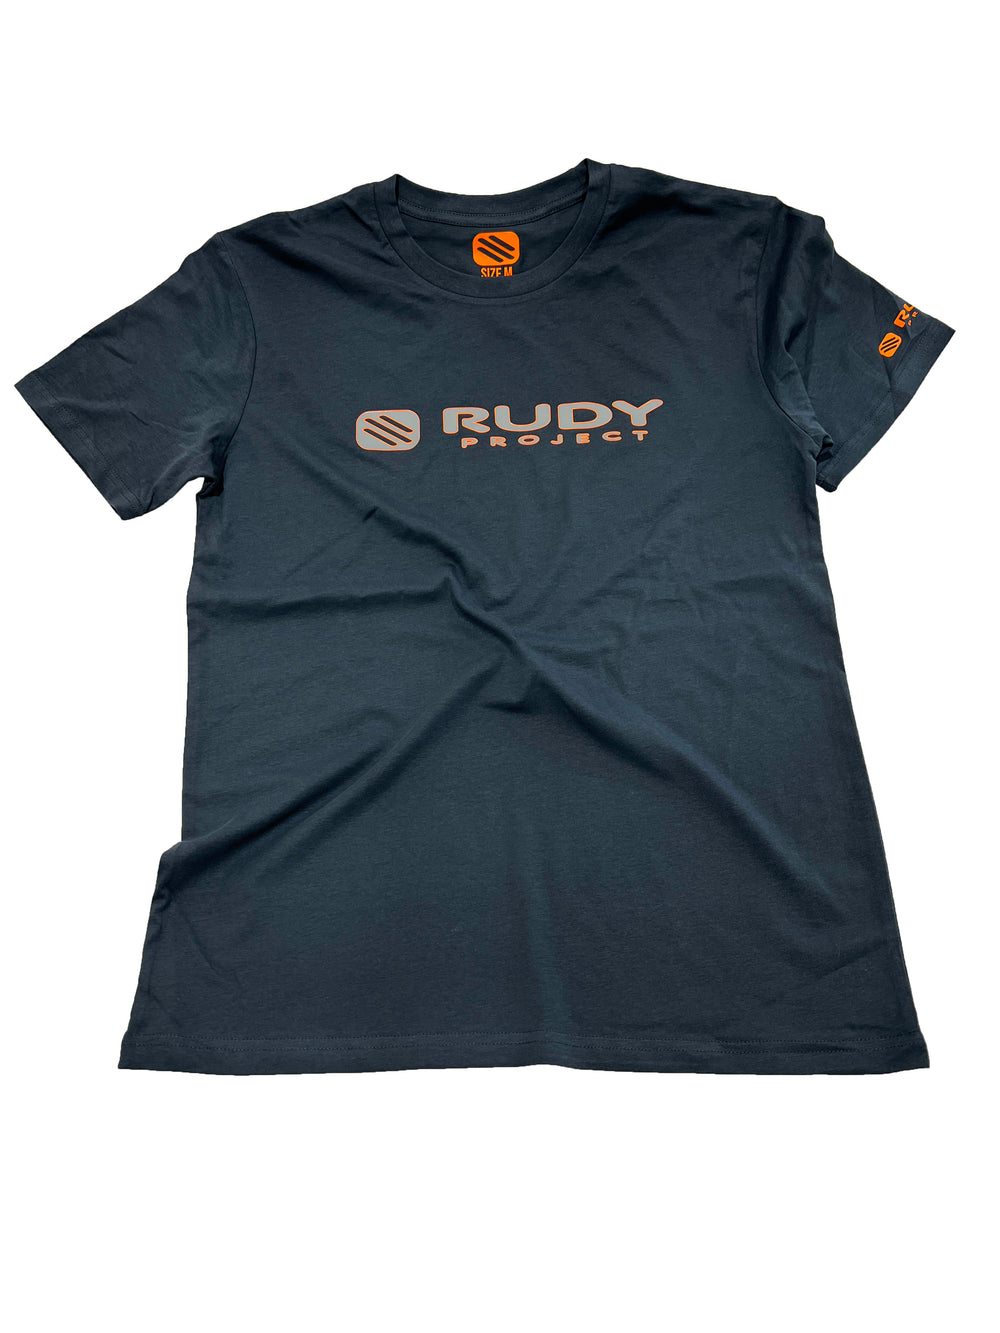 Rudy Project Logo Steel Blue T-Shirt